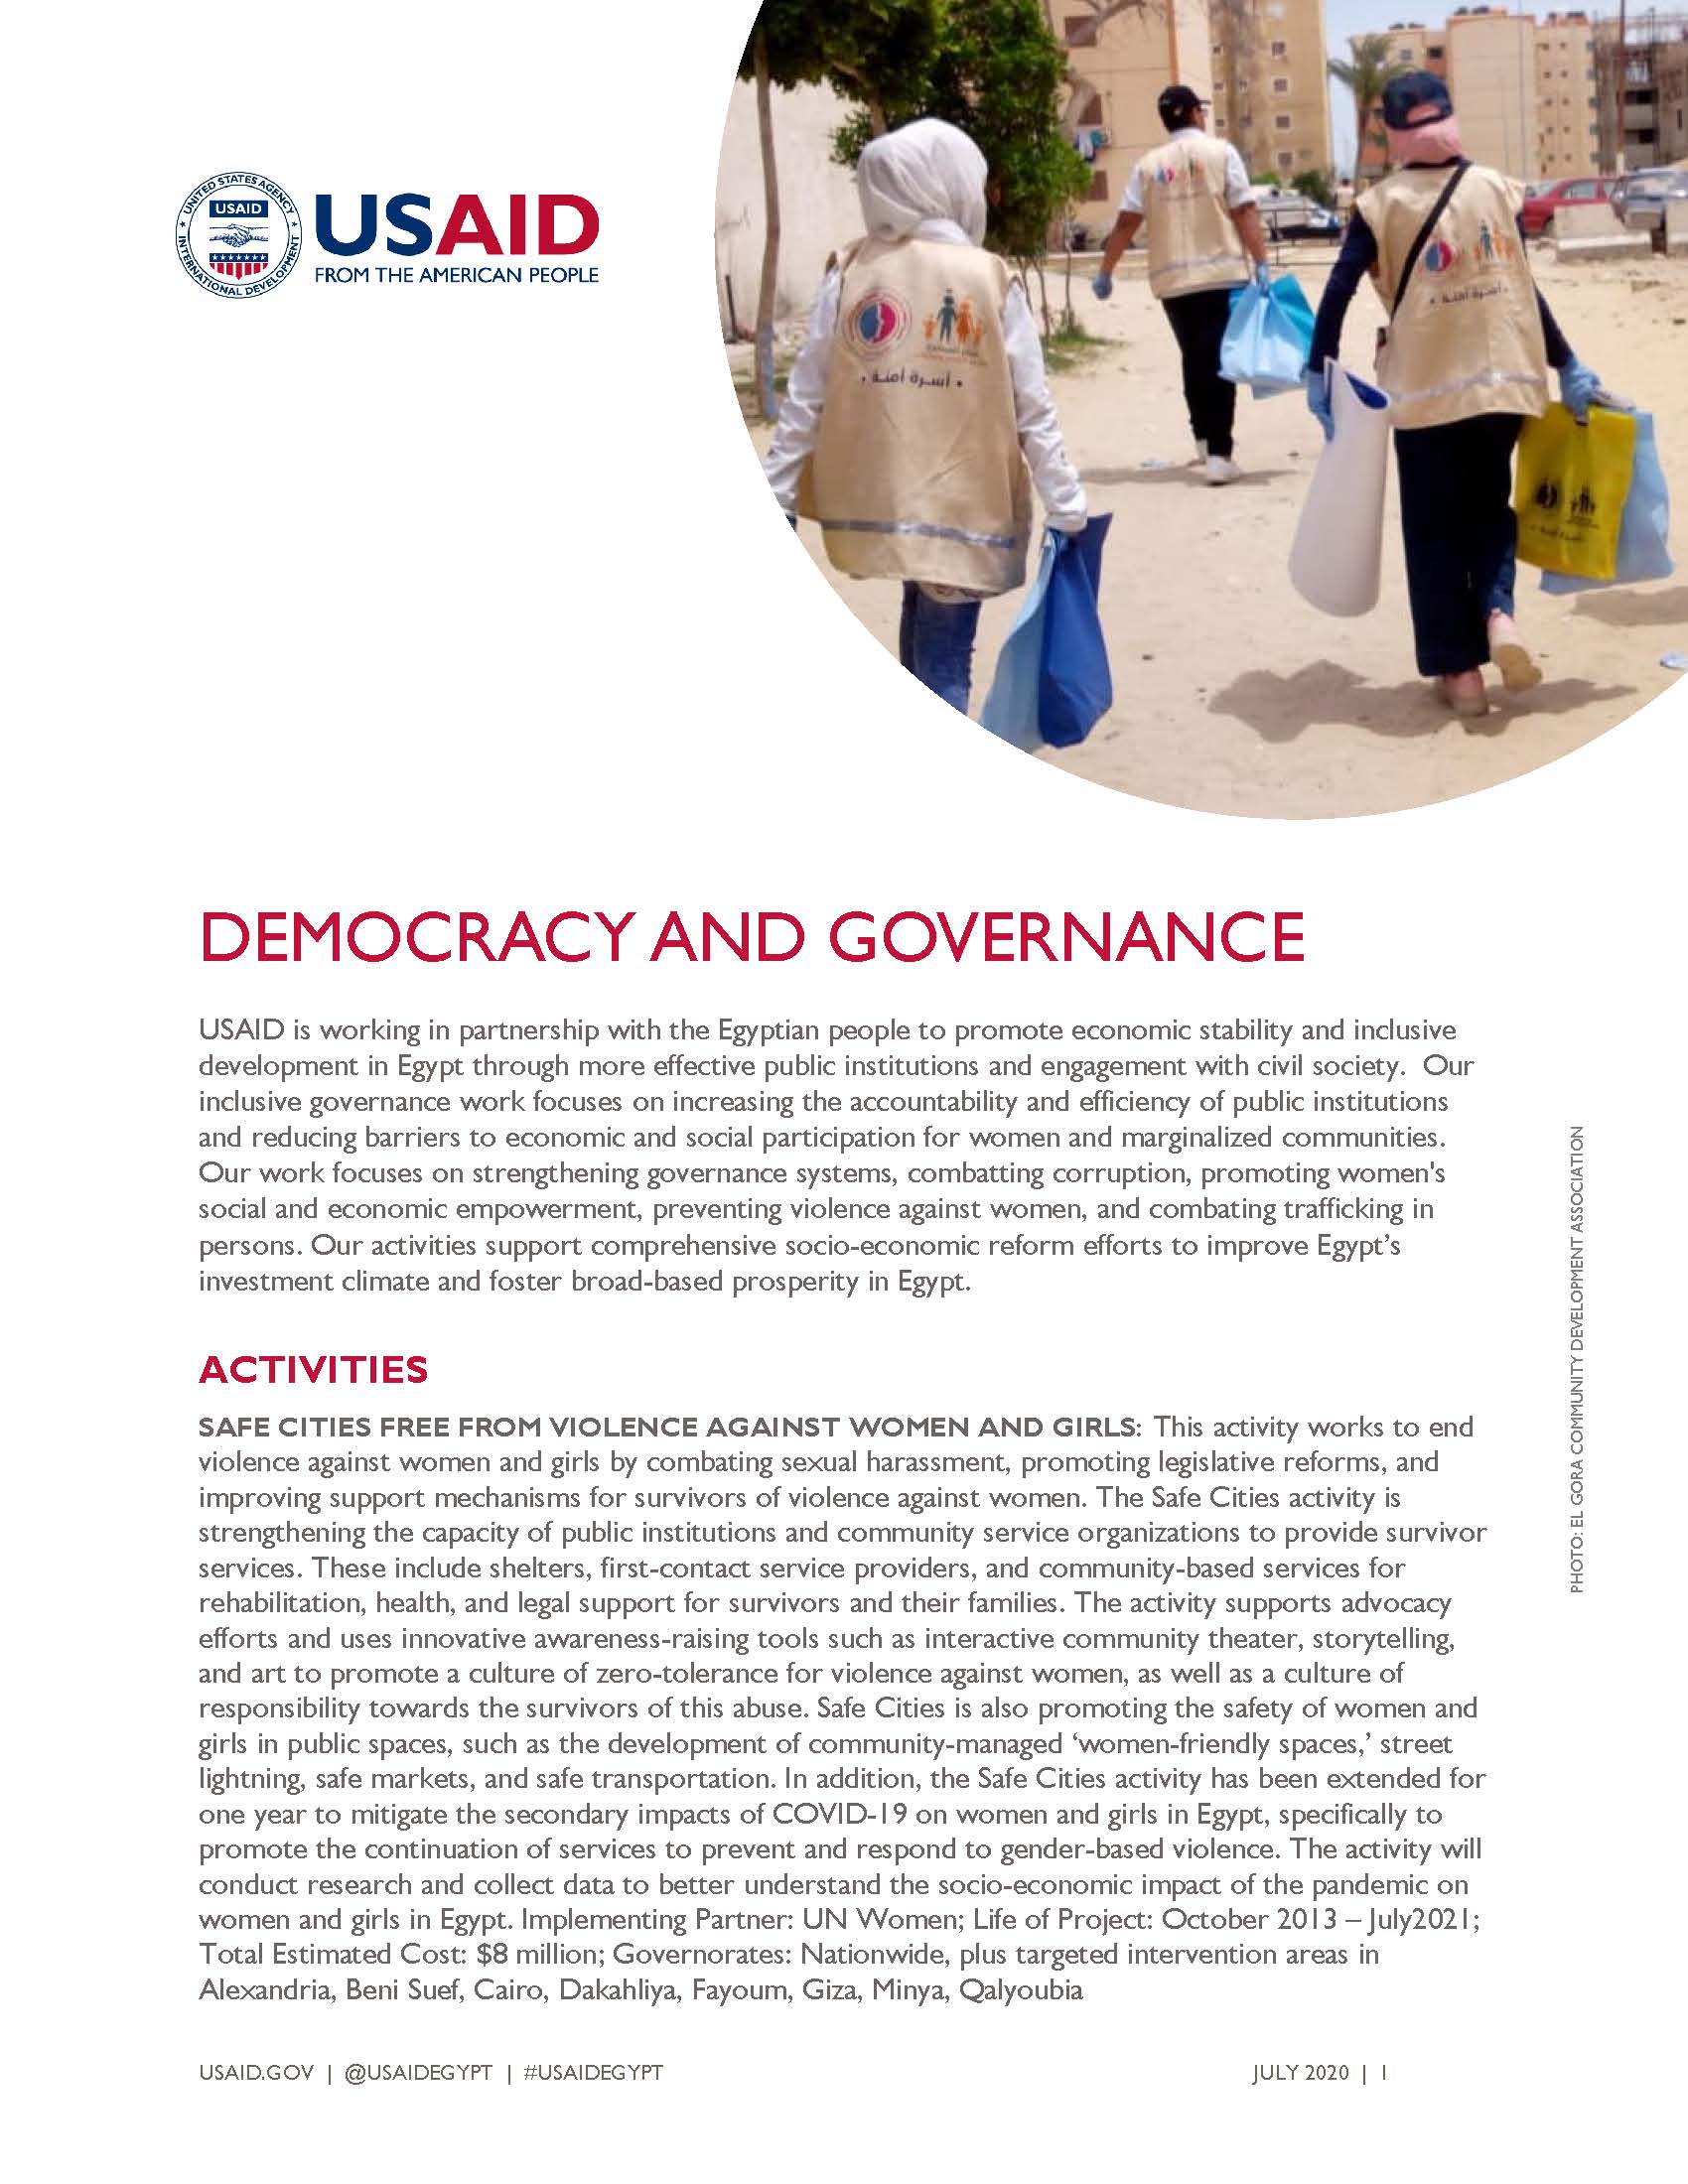 USAID/Egypt Fact Sheet: Democracy and Governance